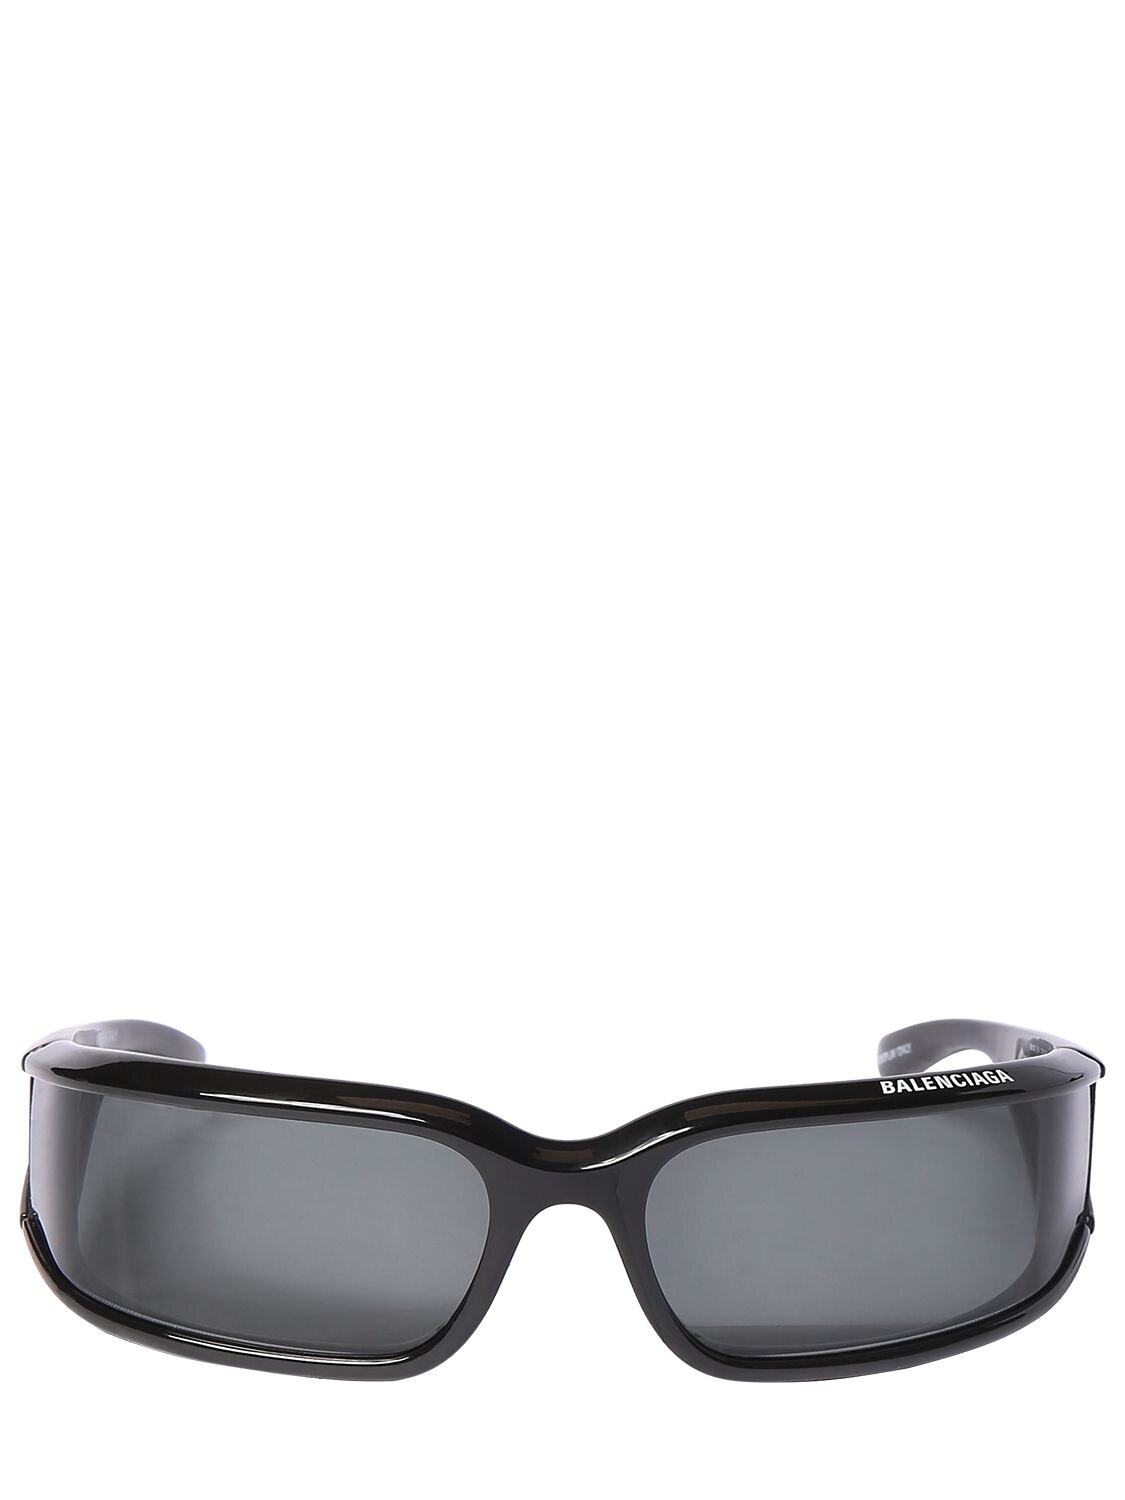 Balenciaga Screen 0123s Rectangular Sunglasses In Black